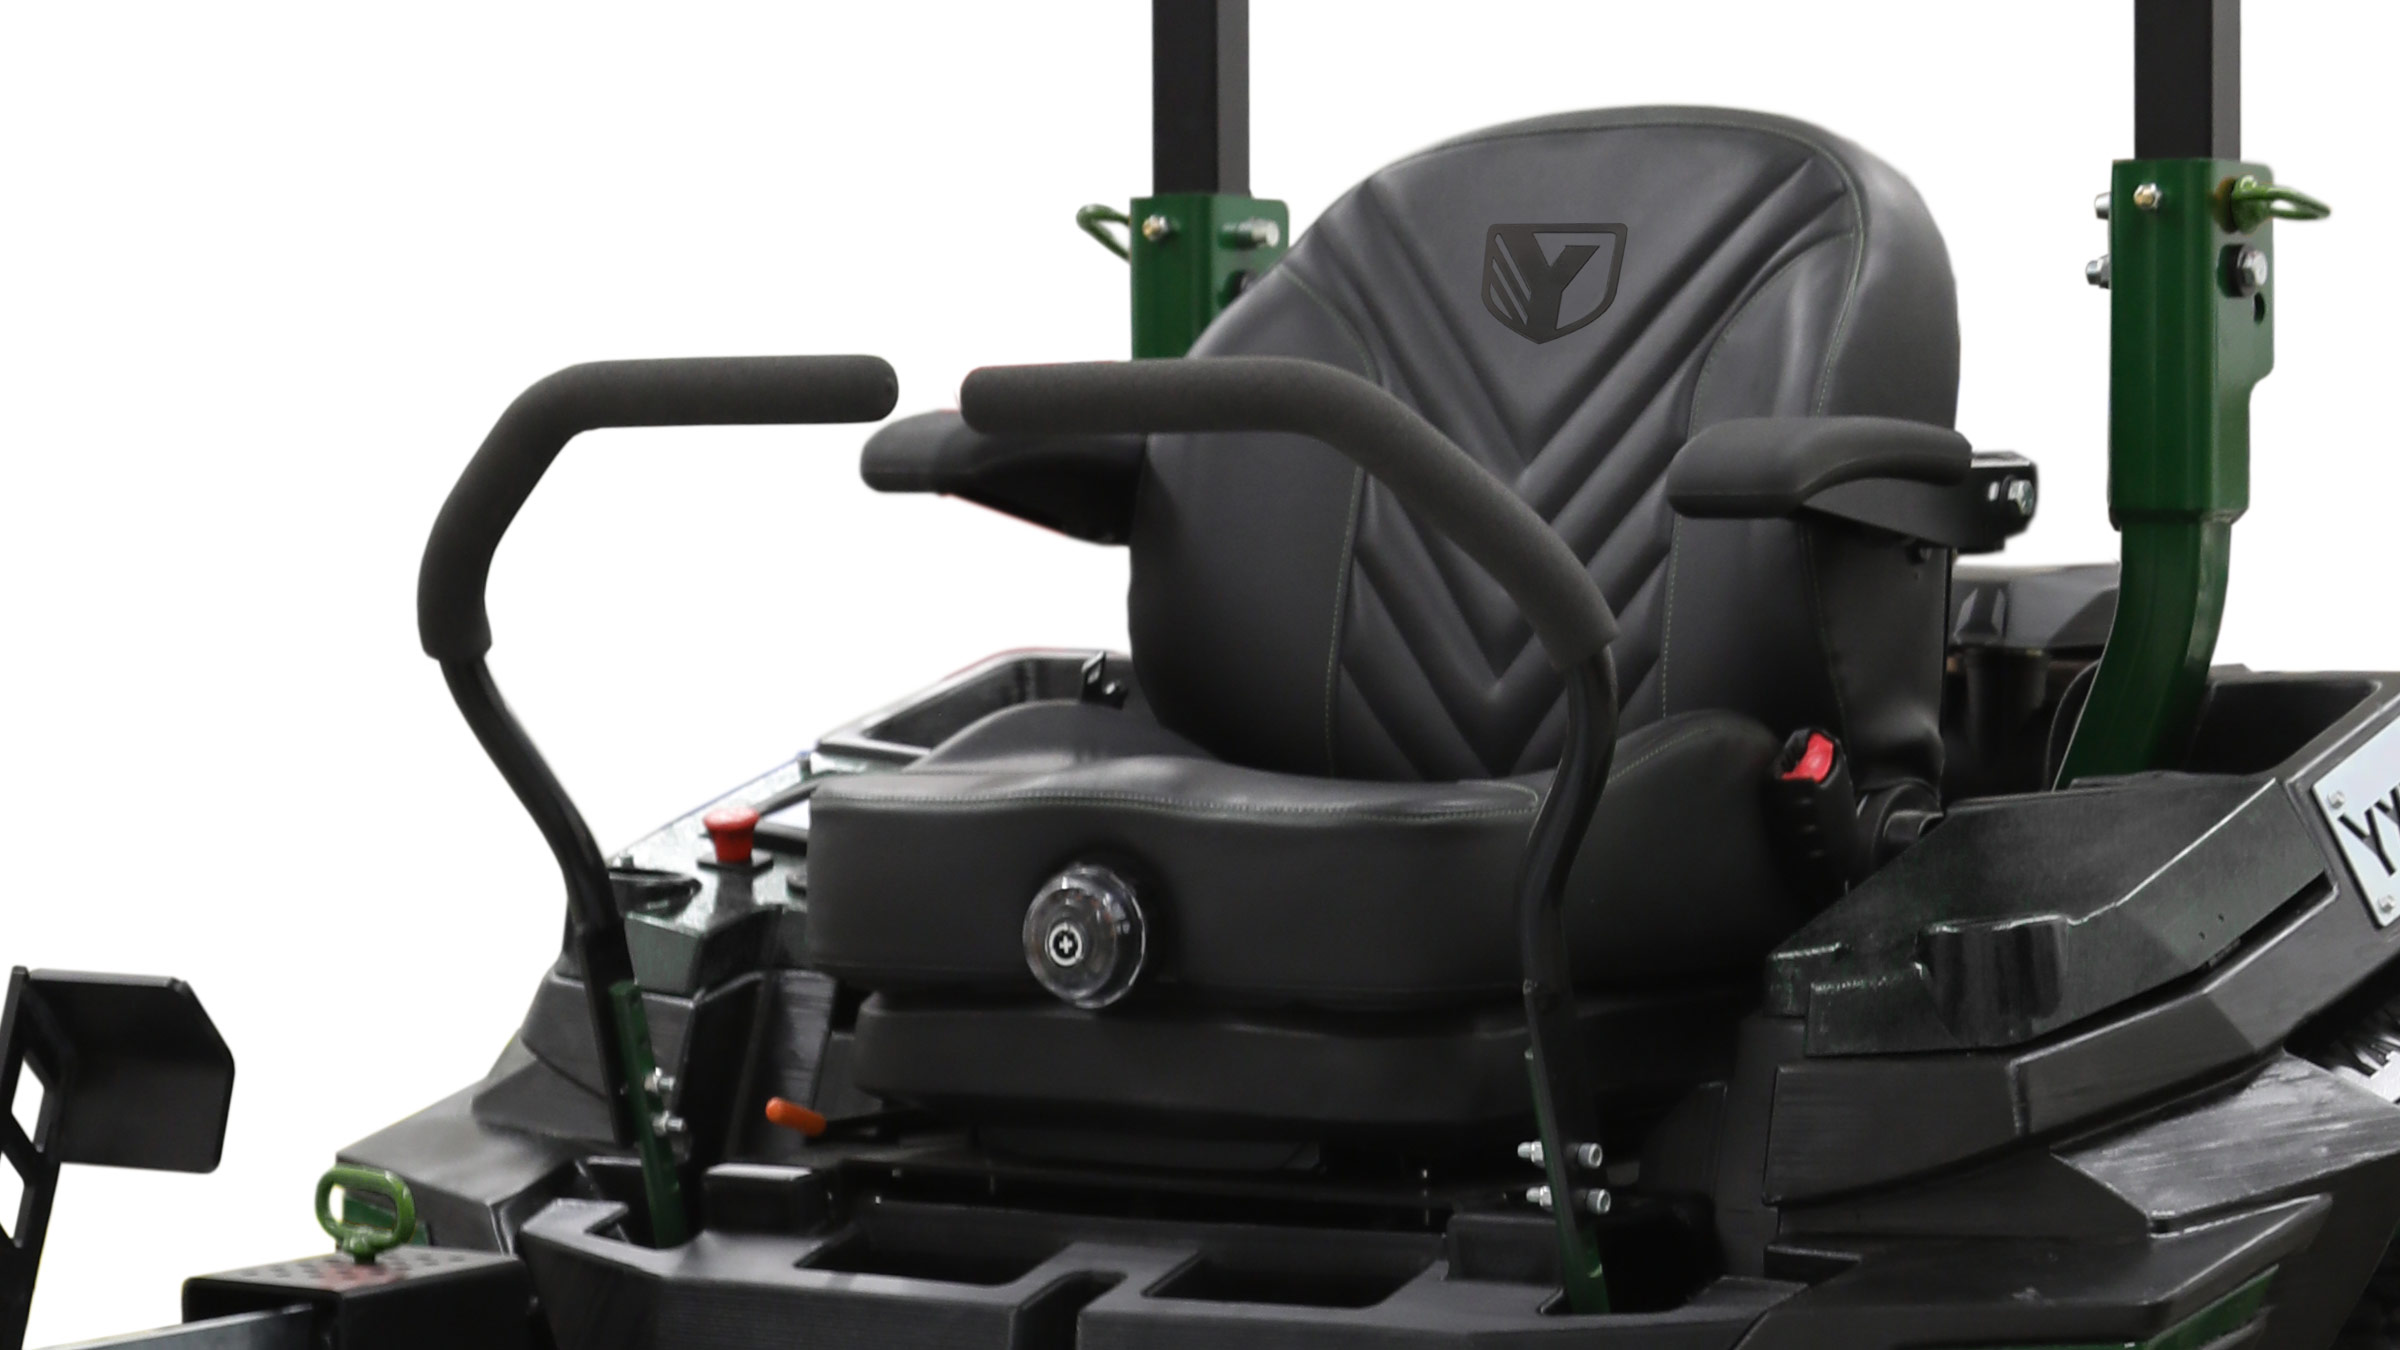 Zero-turn mower suspension seat and drive arm padding